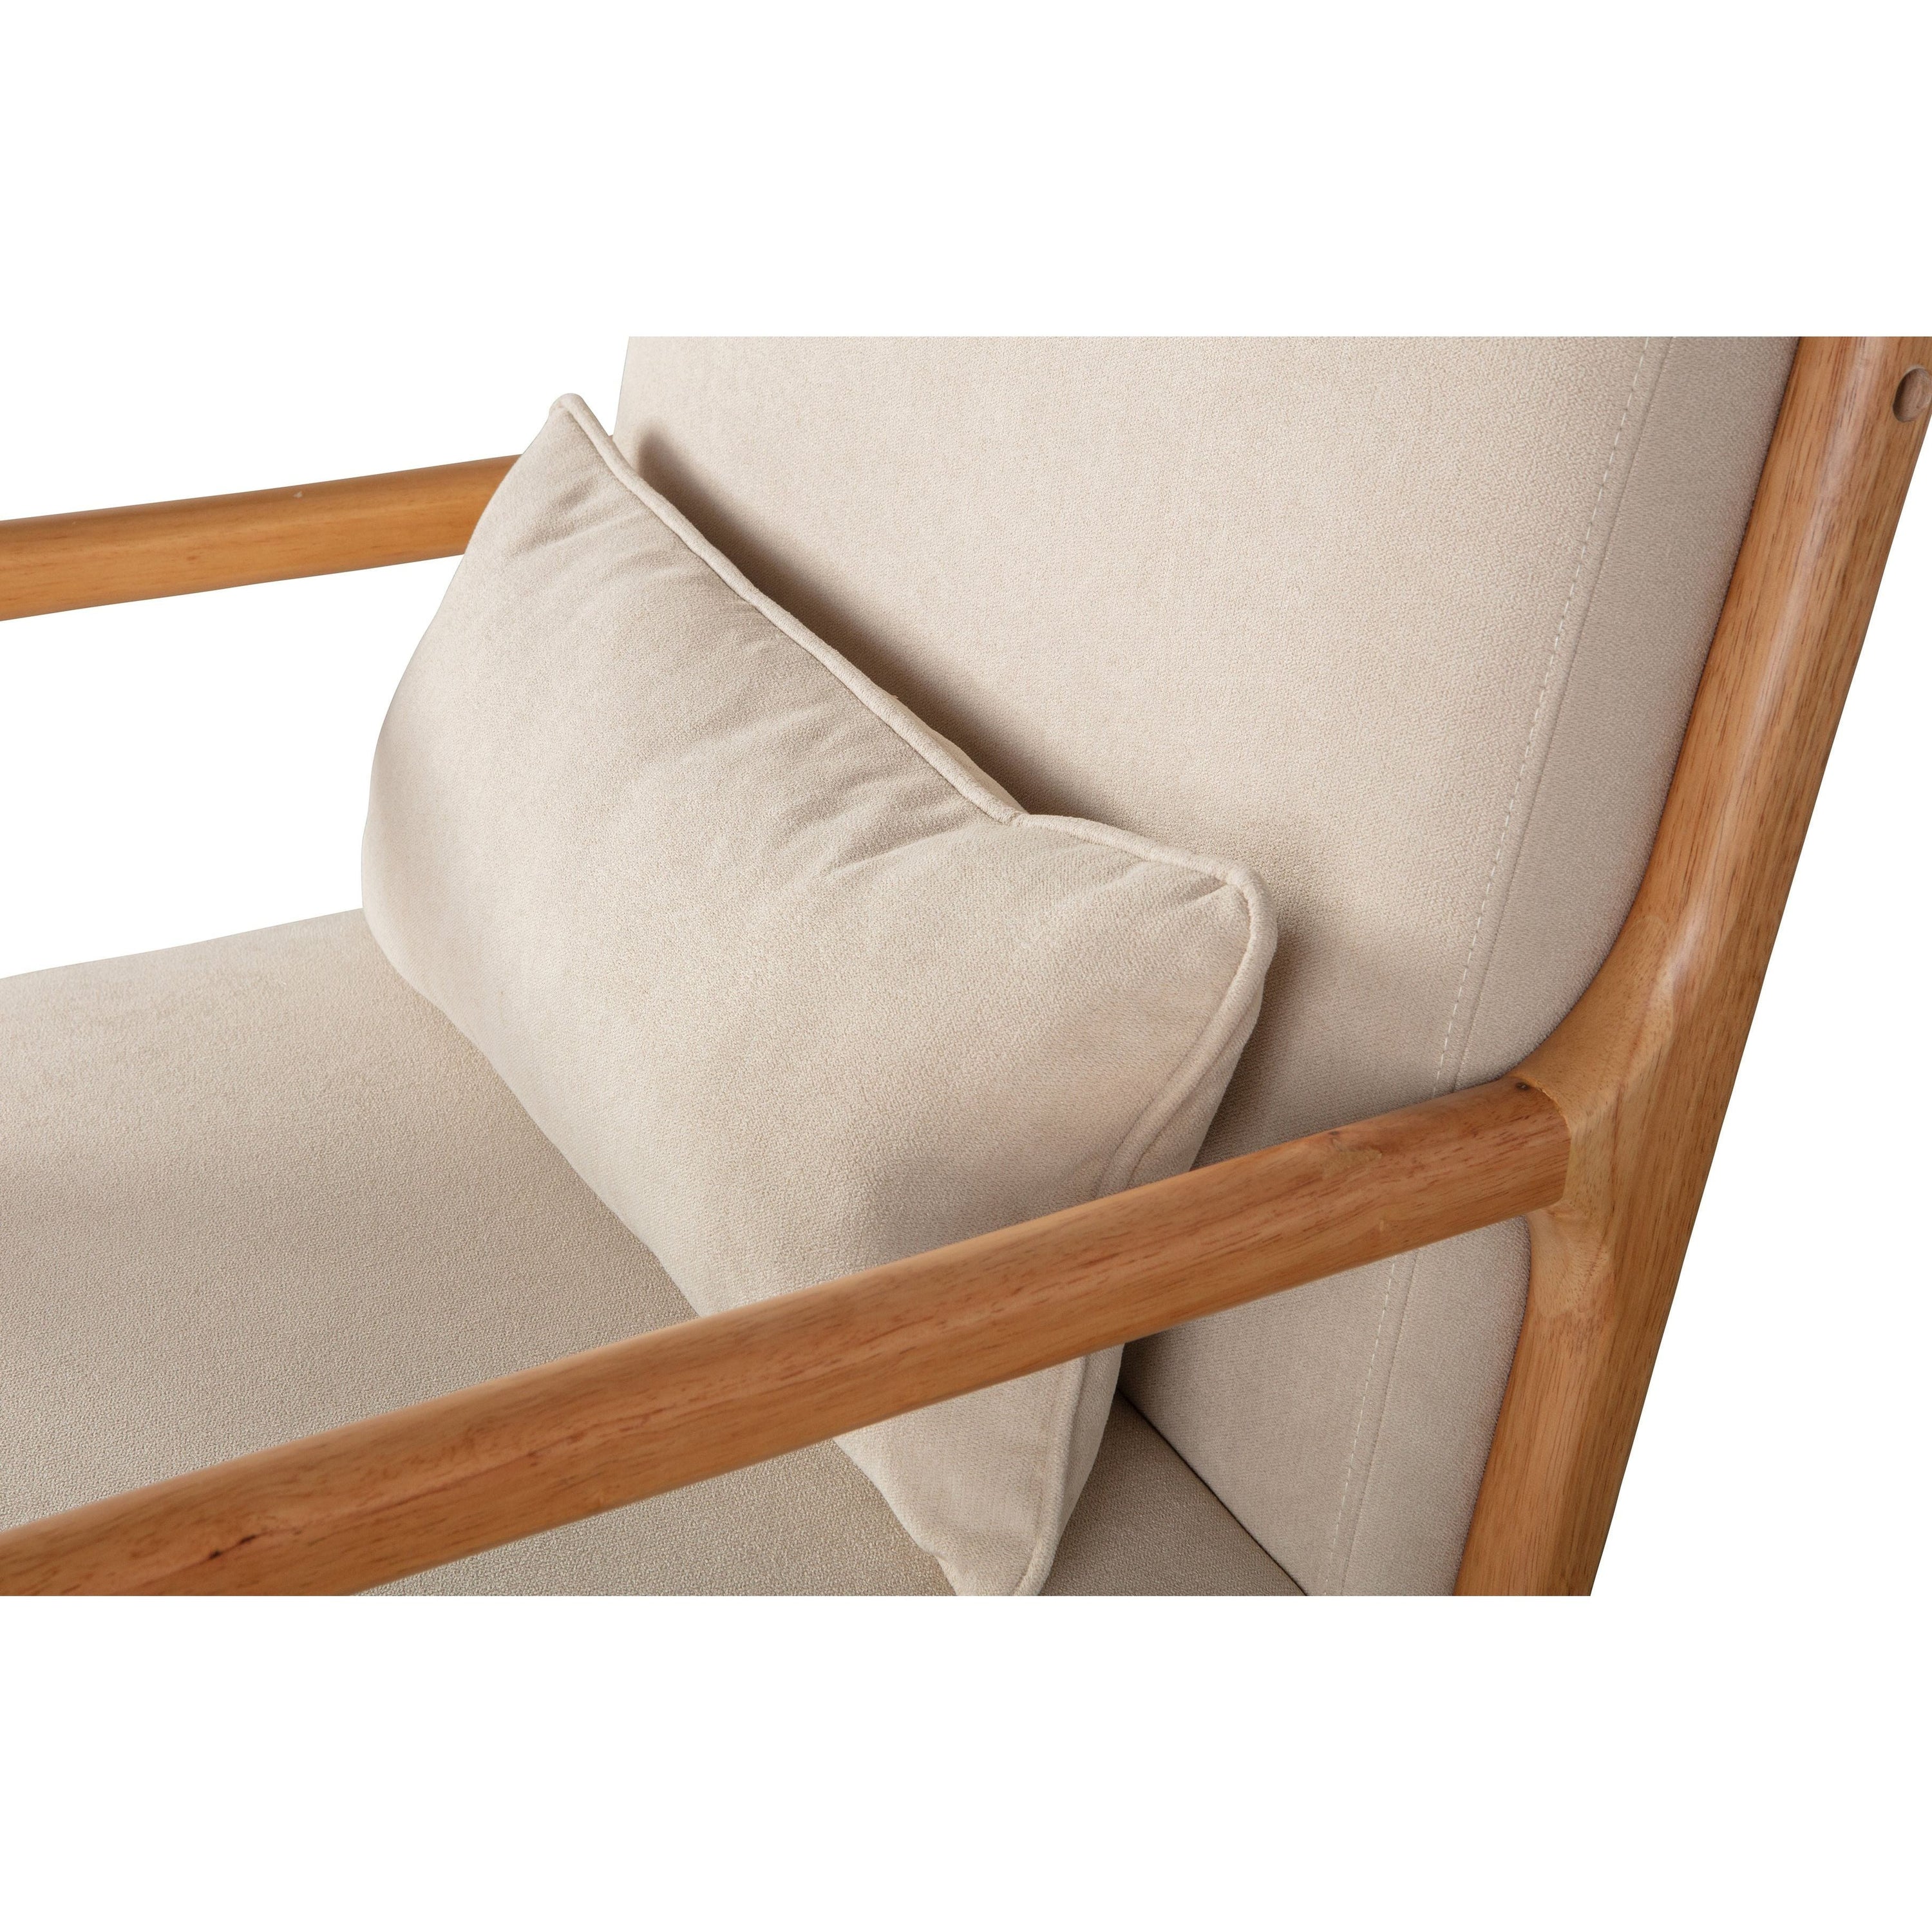 Fotelis su porankiais MARK, natūrali spalva, mediena